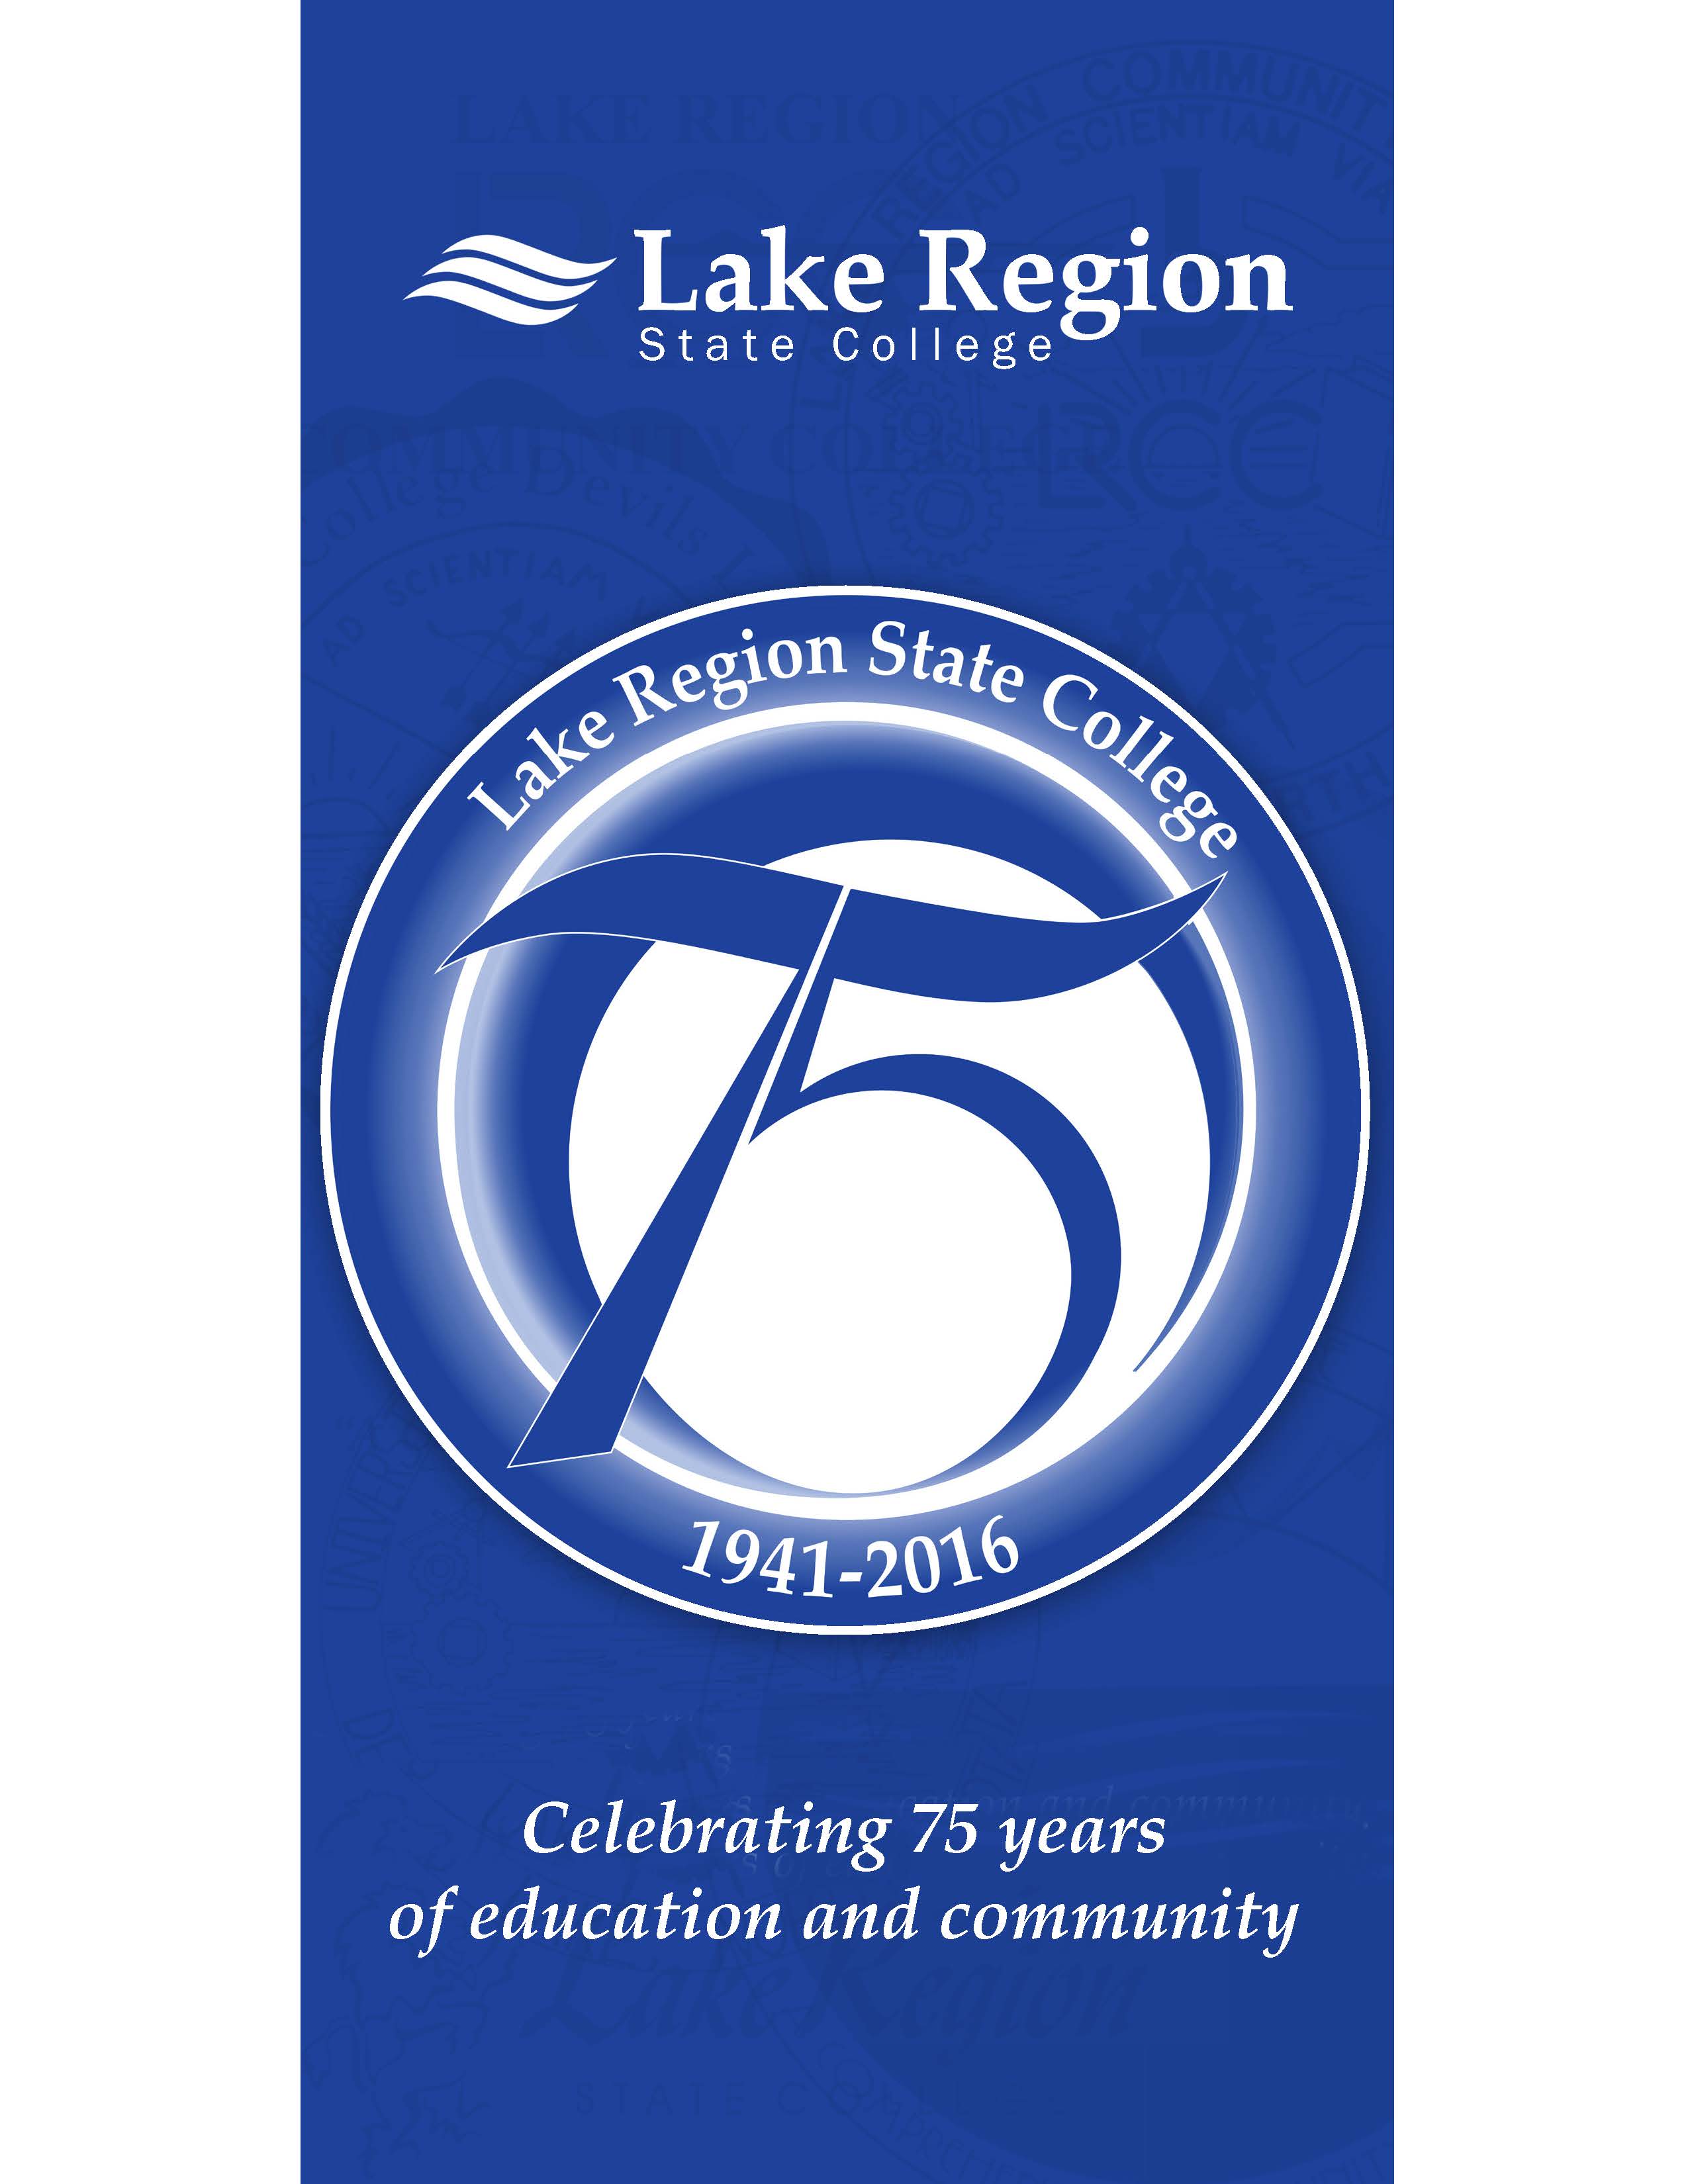 Lake Region State College 75th Anniversary Publication, 2016